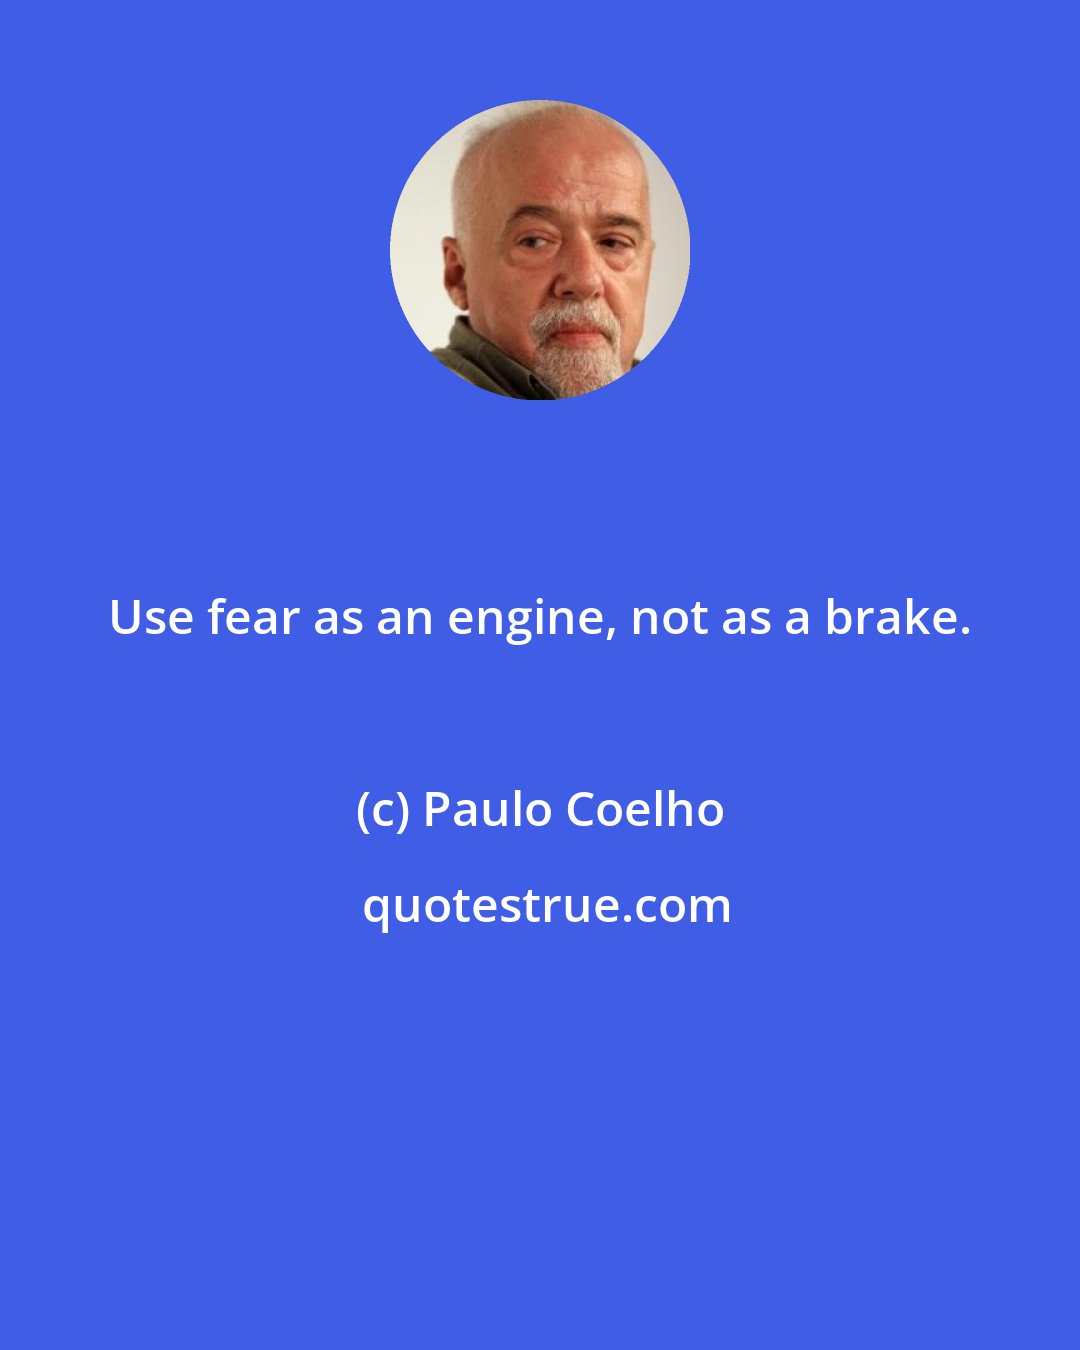 Paulo Coelho: Use fear as an engine, not as a brake.